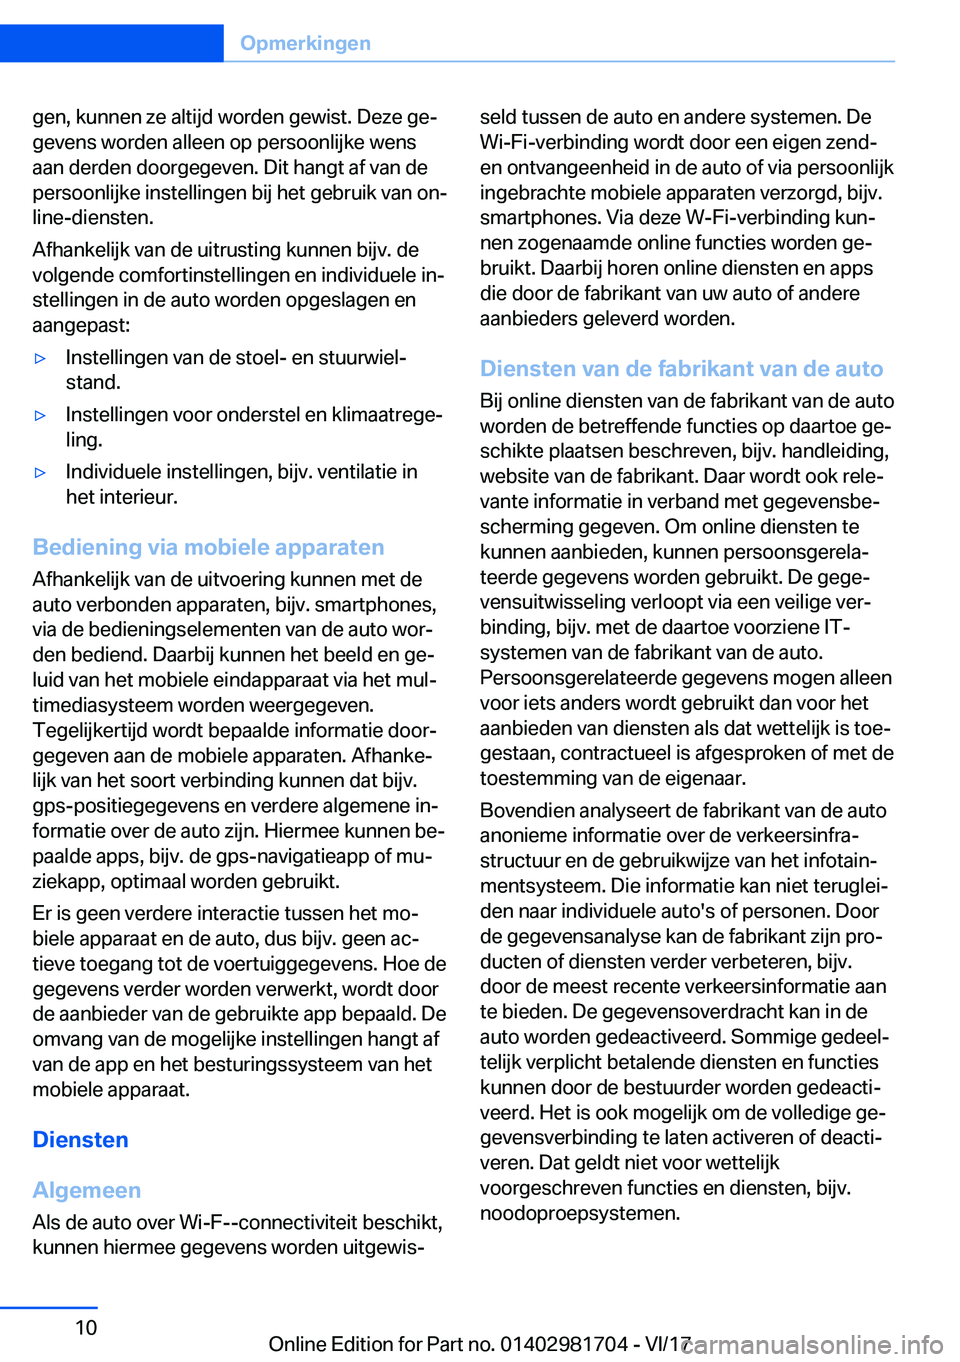 BMW M4 2018  Instructieboekjes (in Dutch) �g�e�n�,� �k�u�n�n�e�n� �z�e� �a�l�t�i�j�d� �w�o�r�d�e�n� �g�e�w�i�s�t�.� �D�e�z�e� �g�ej�g�e�v�e�n�s� �w�o�r�d�e�n� �a�l�l�e�e�n� �o�p� �p�e�r�s�o�o�n�l�i�j�k�e� �w�e�n�s�a�a�n� �d�e�r�d�e�n� �d�o�o